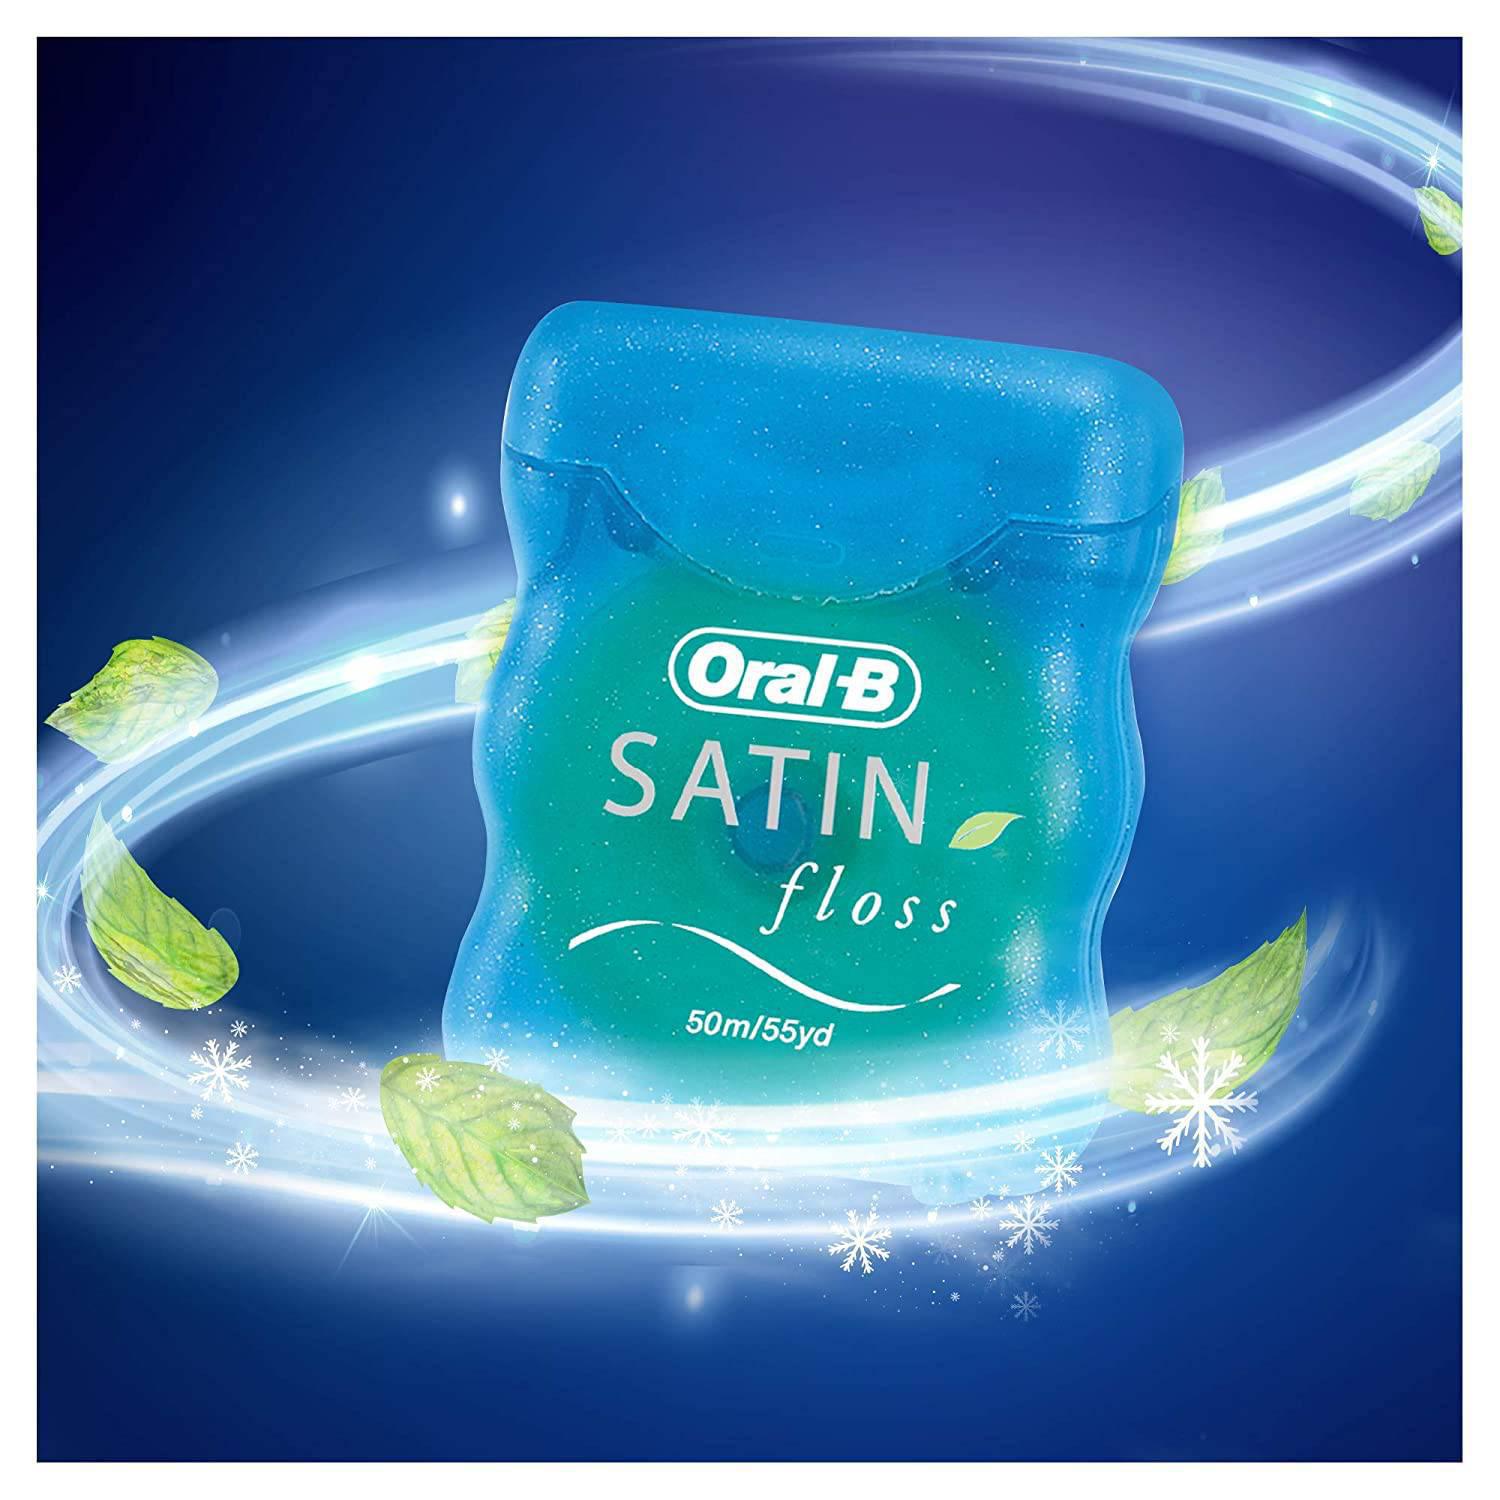 Oral-B Satin Floss Mint Dental Floss - Comfort Grip, Oval Shape - Mint, 25M - Healthxpress.ie